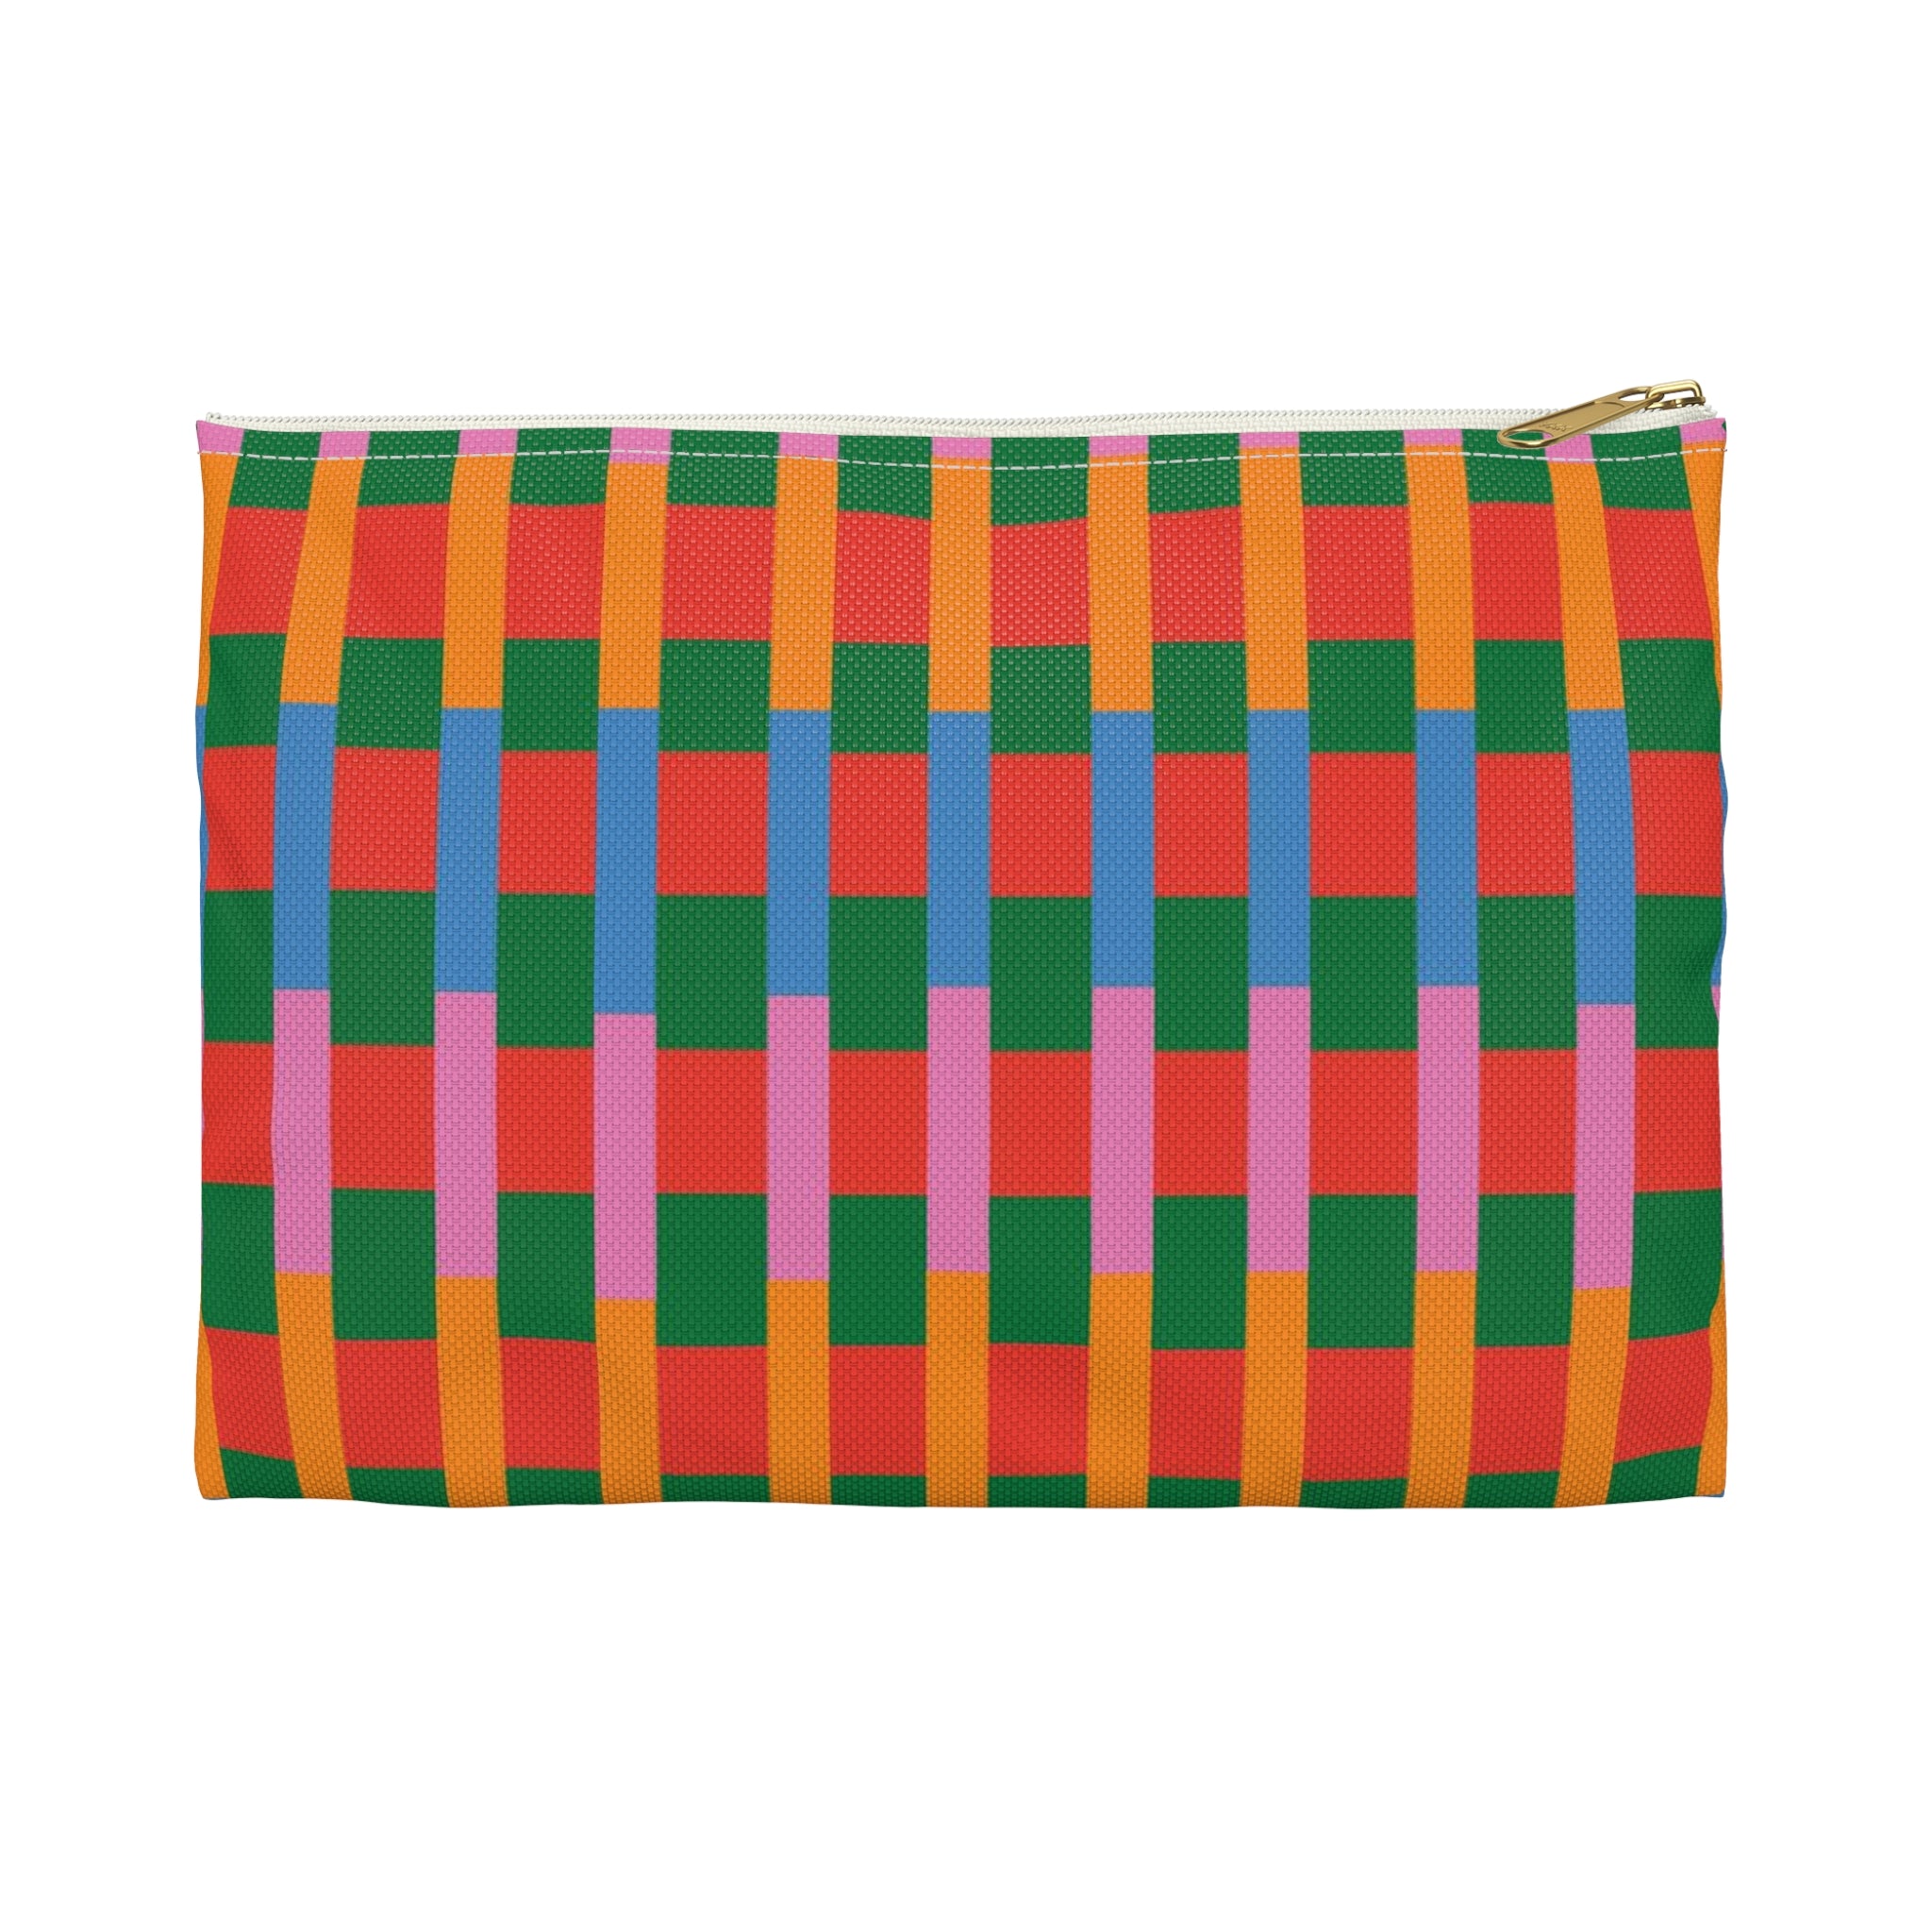 Candy Color Block Stripe Accessory Pouch